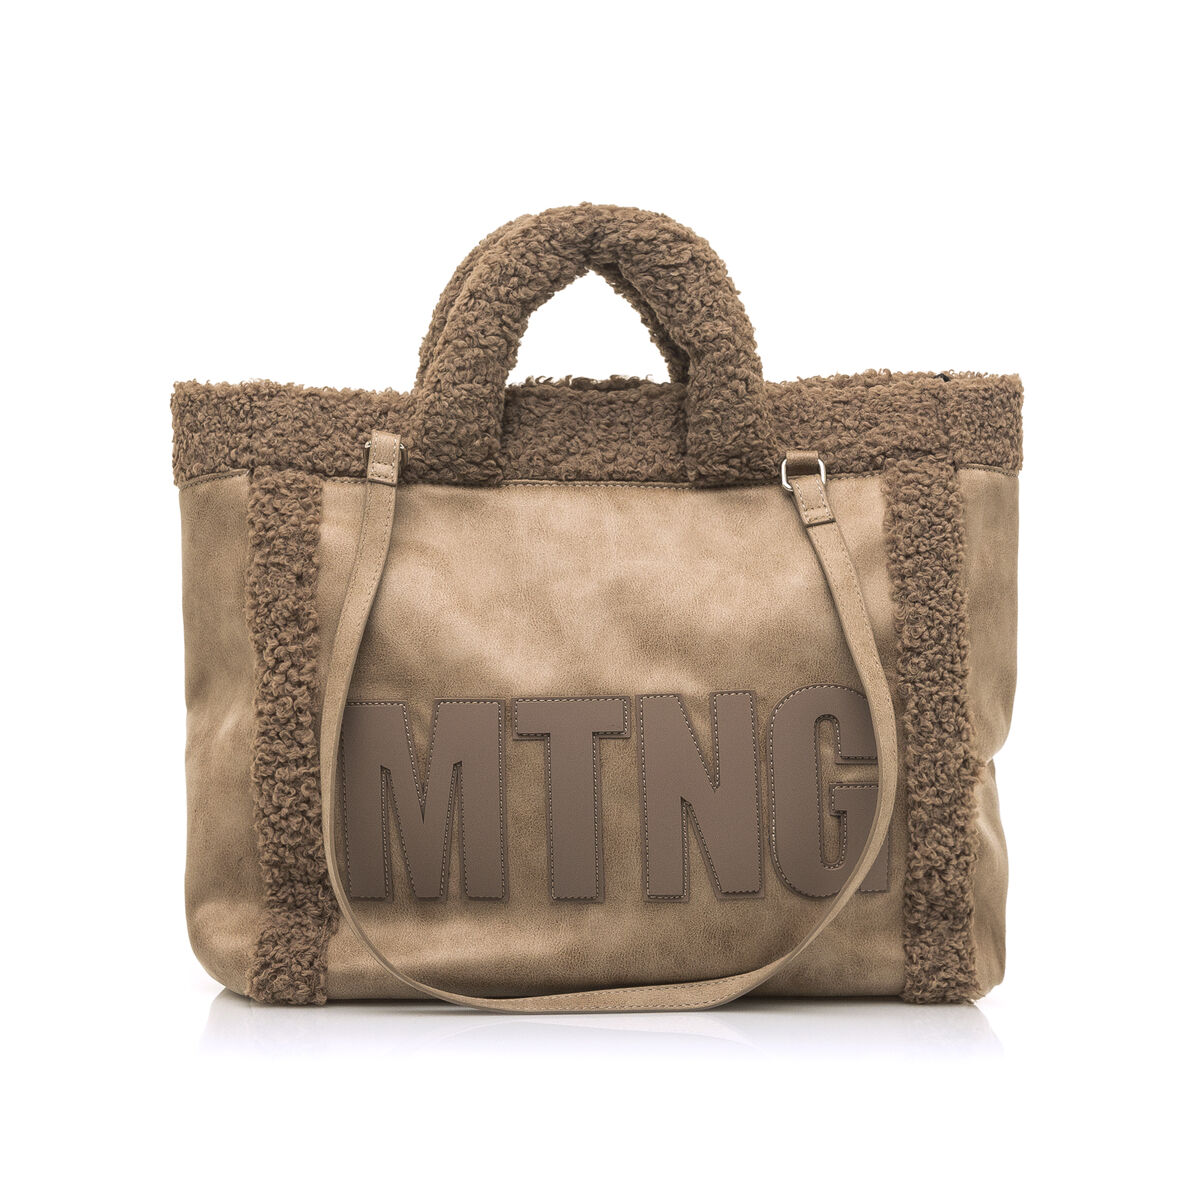 MTNG SHOPPER SHAPE BROWN BAG